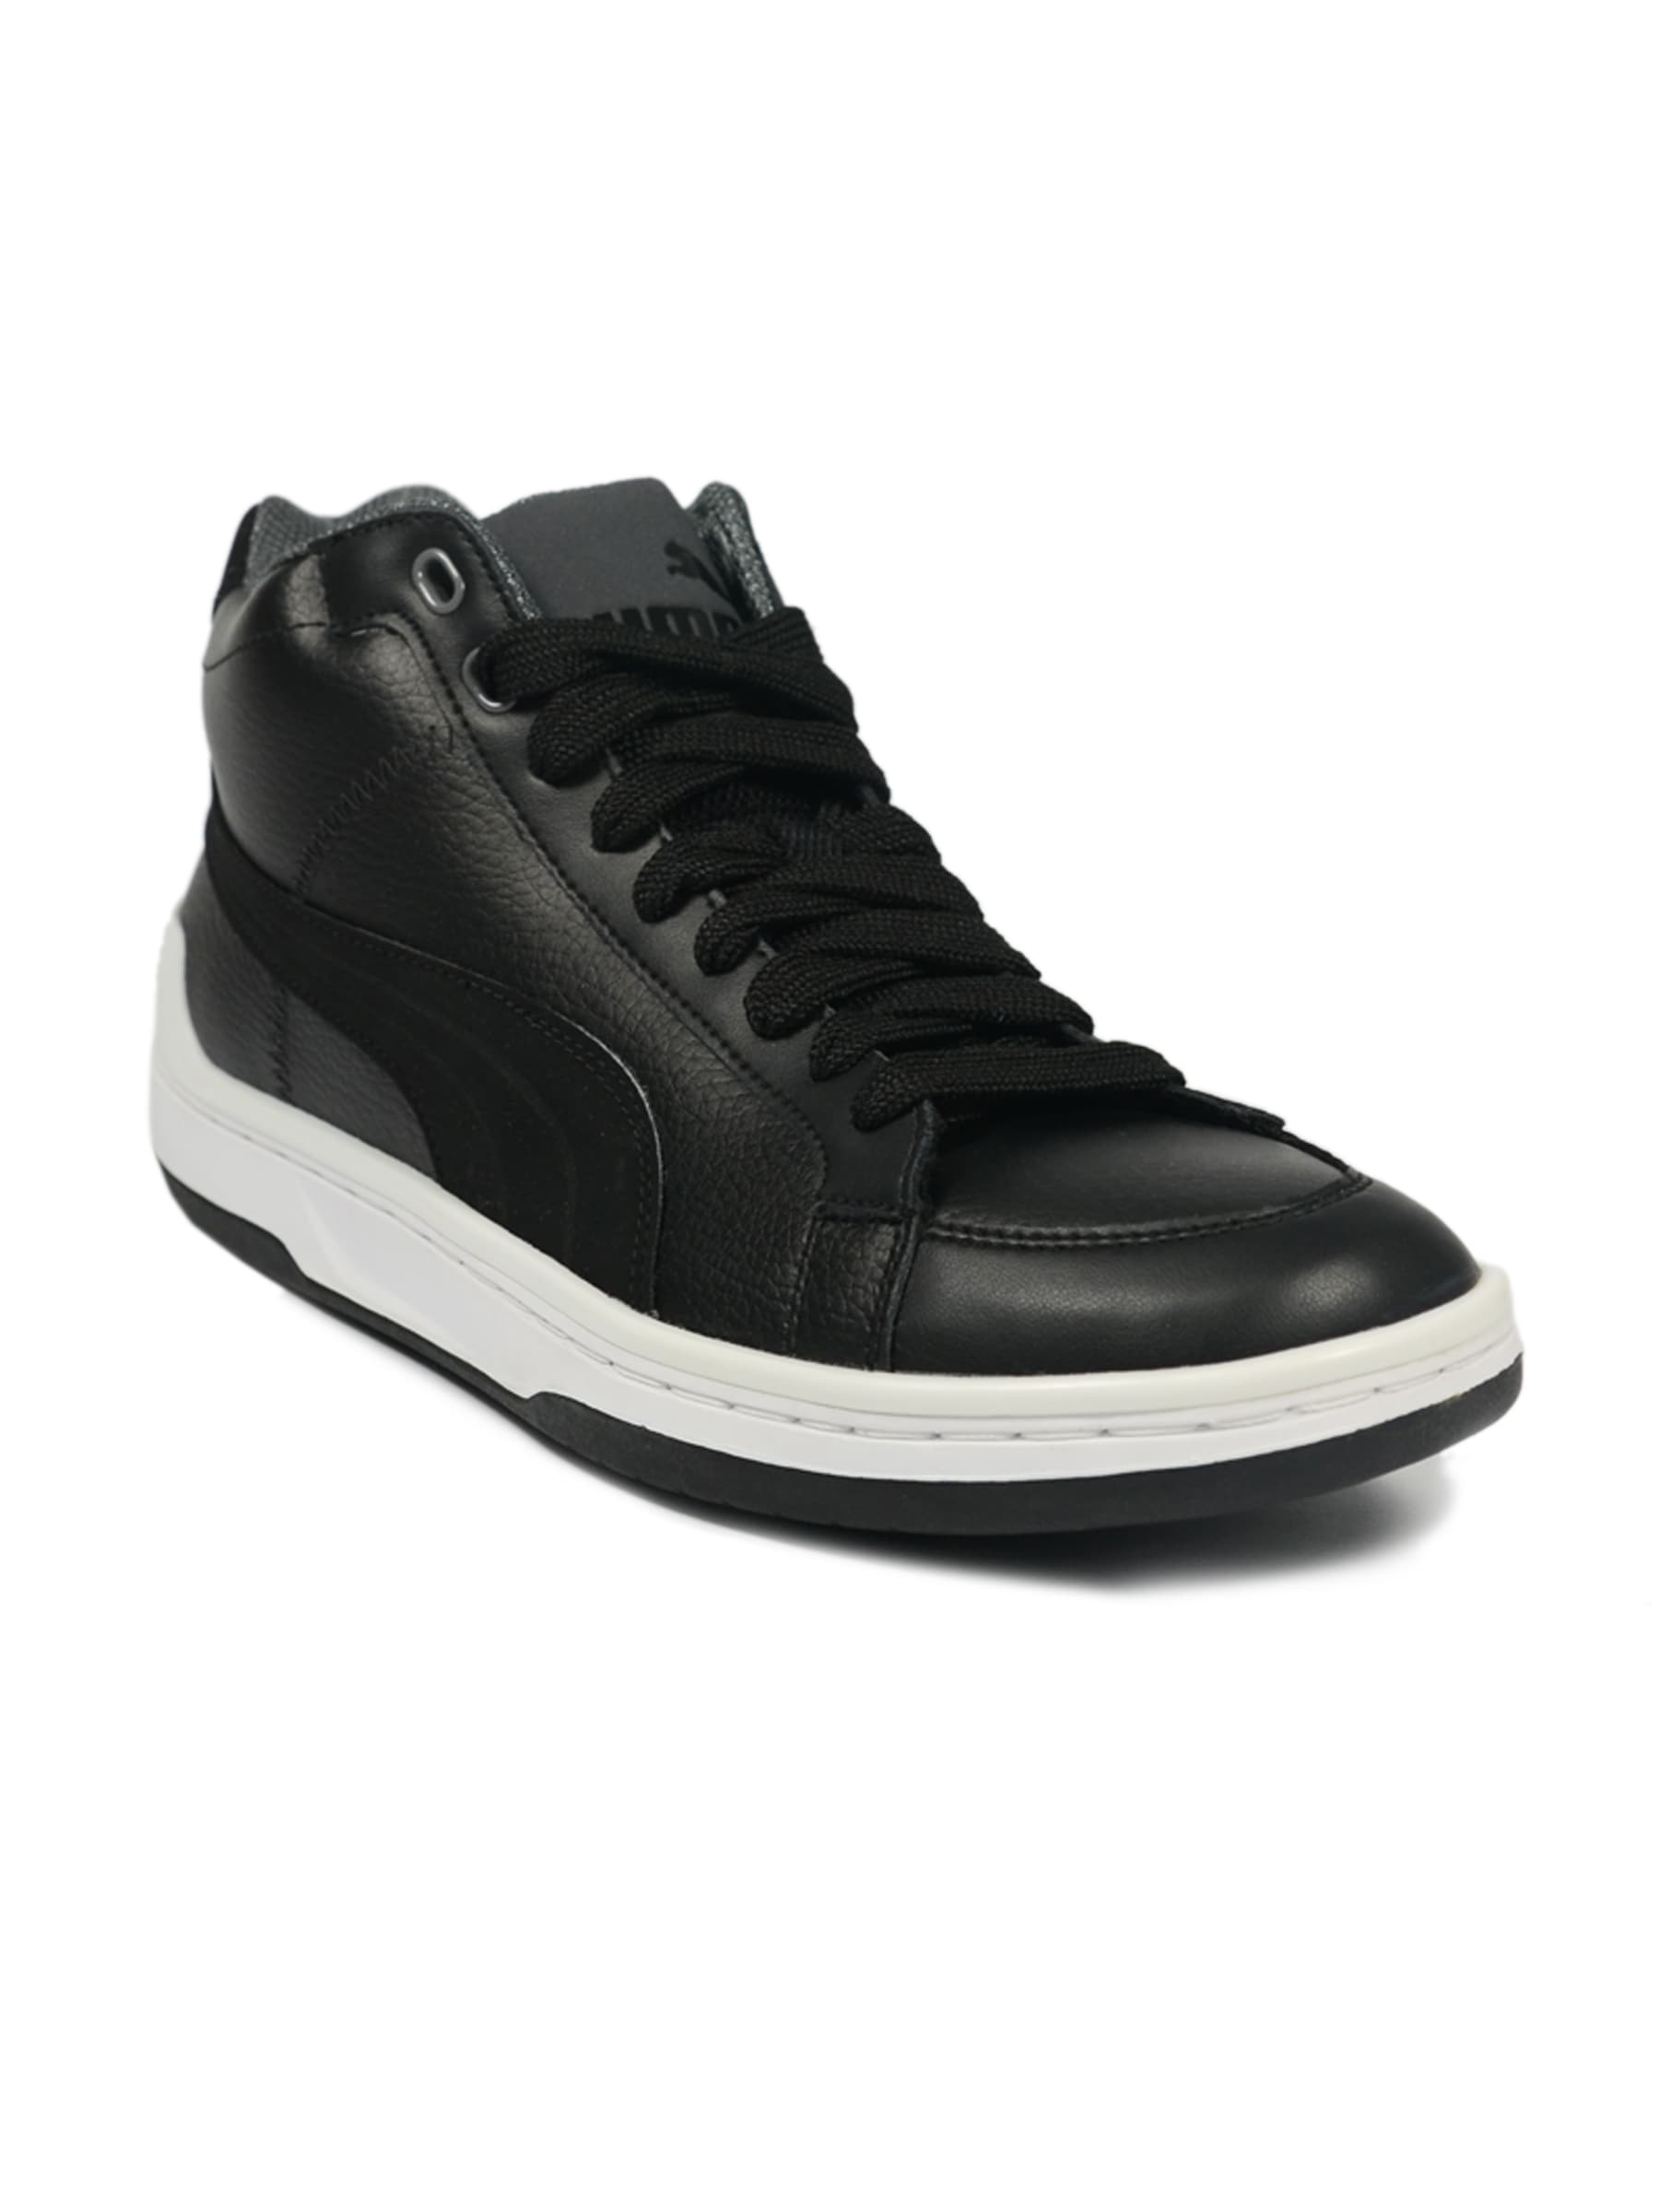 Puma Men's Mid Evo Leather Black Shoe